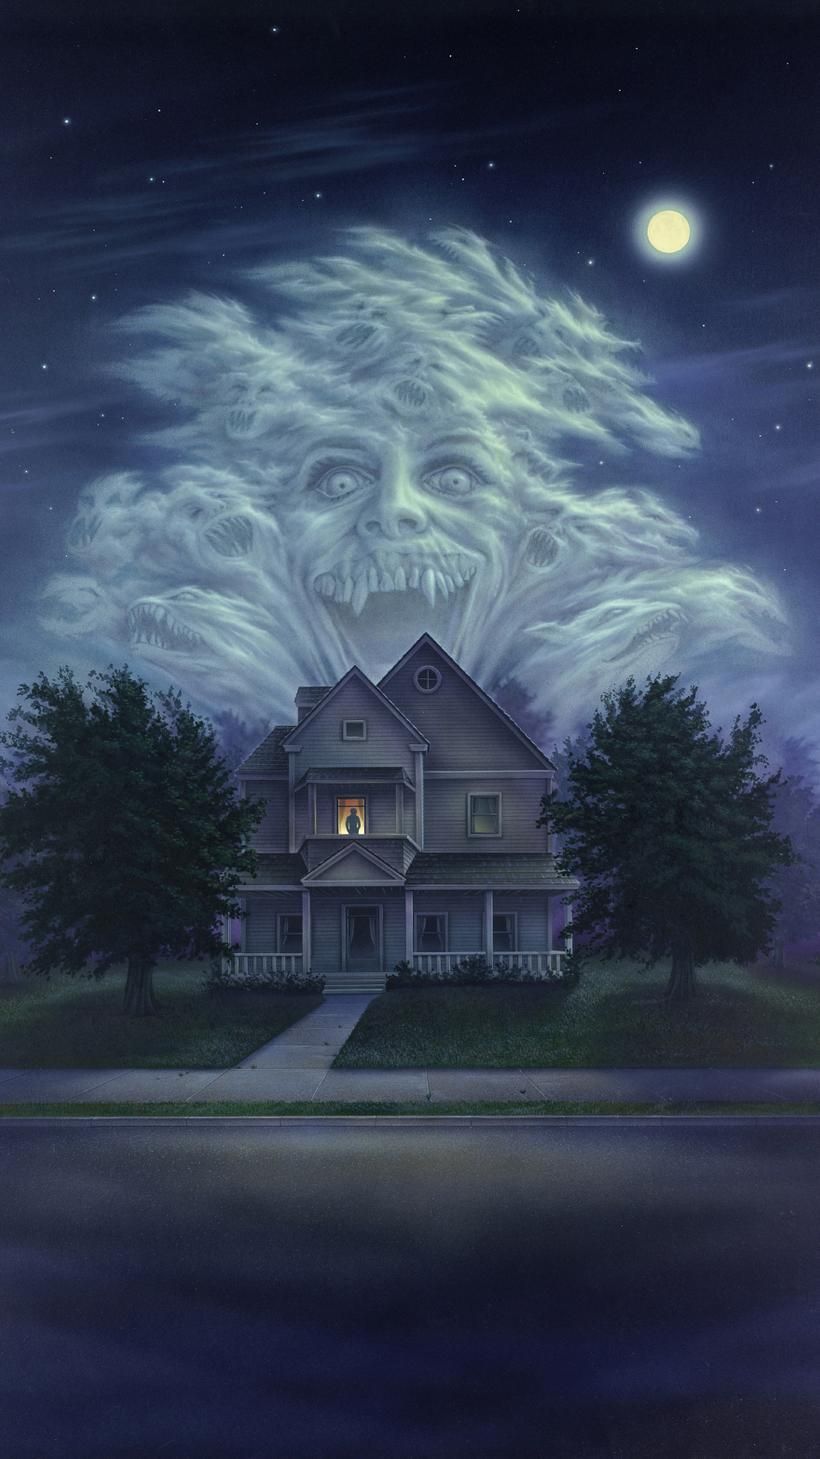 Fright Night (1985) Phone Wallpaper. Moviemania. Scary wallpaper, Background image wallpaper, Halloween desktop wallpaper